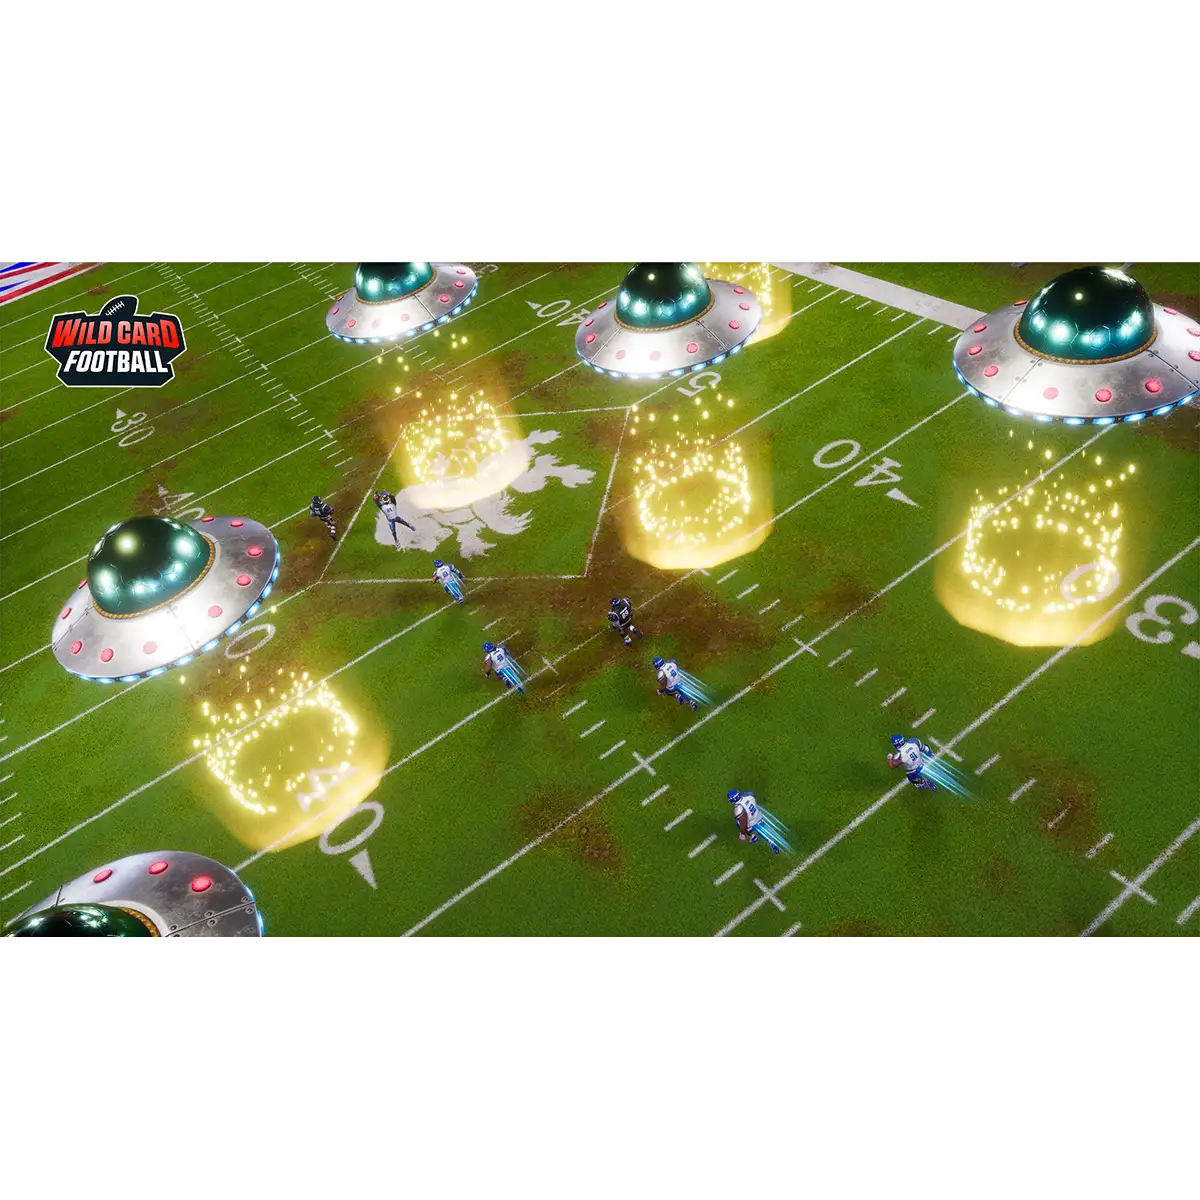 Wild Card Football (Xbox One / Xbox Series X) Image 3